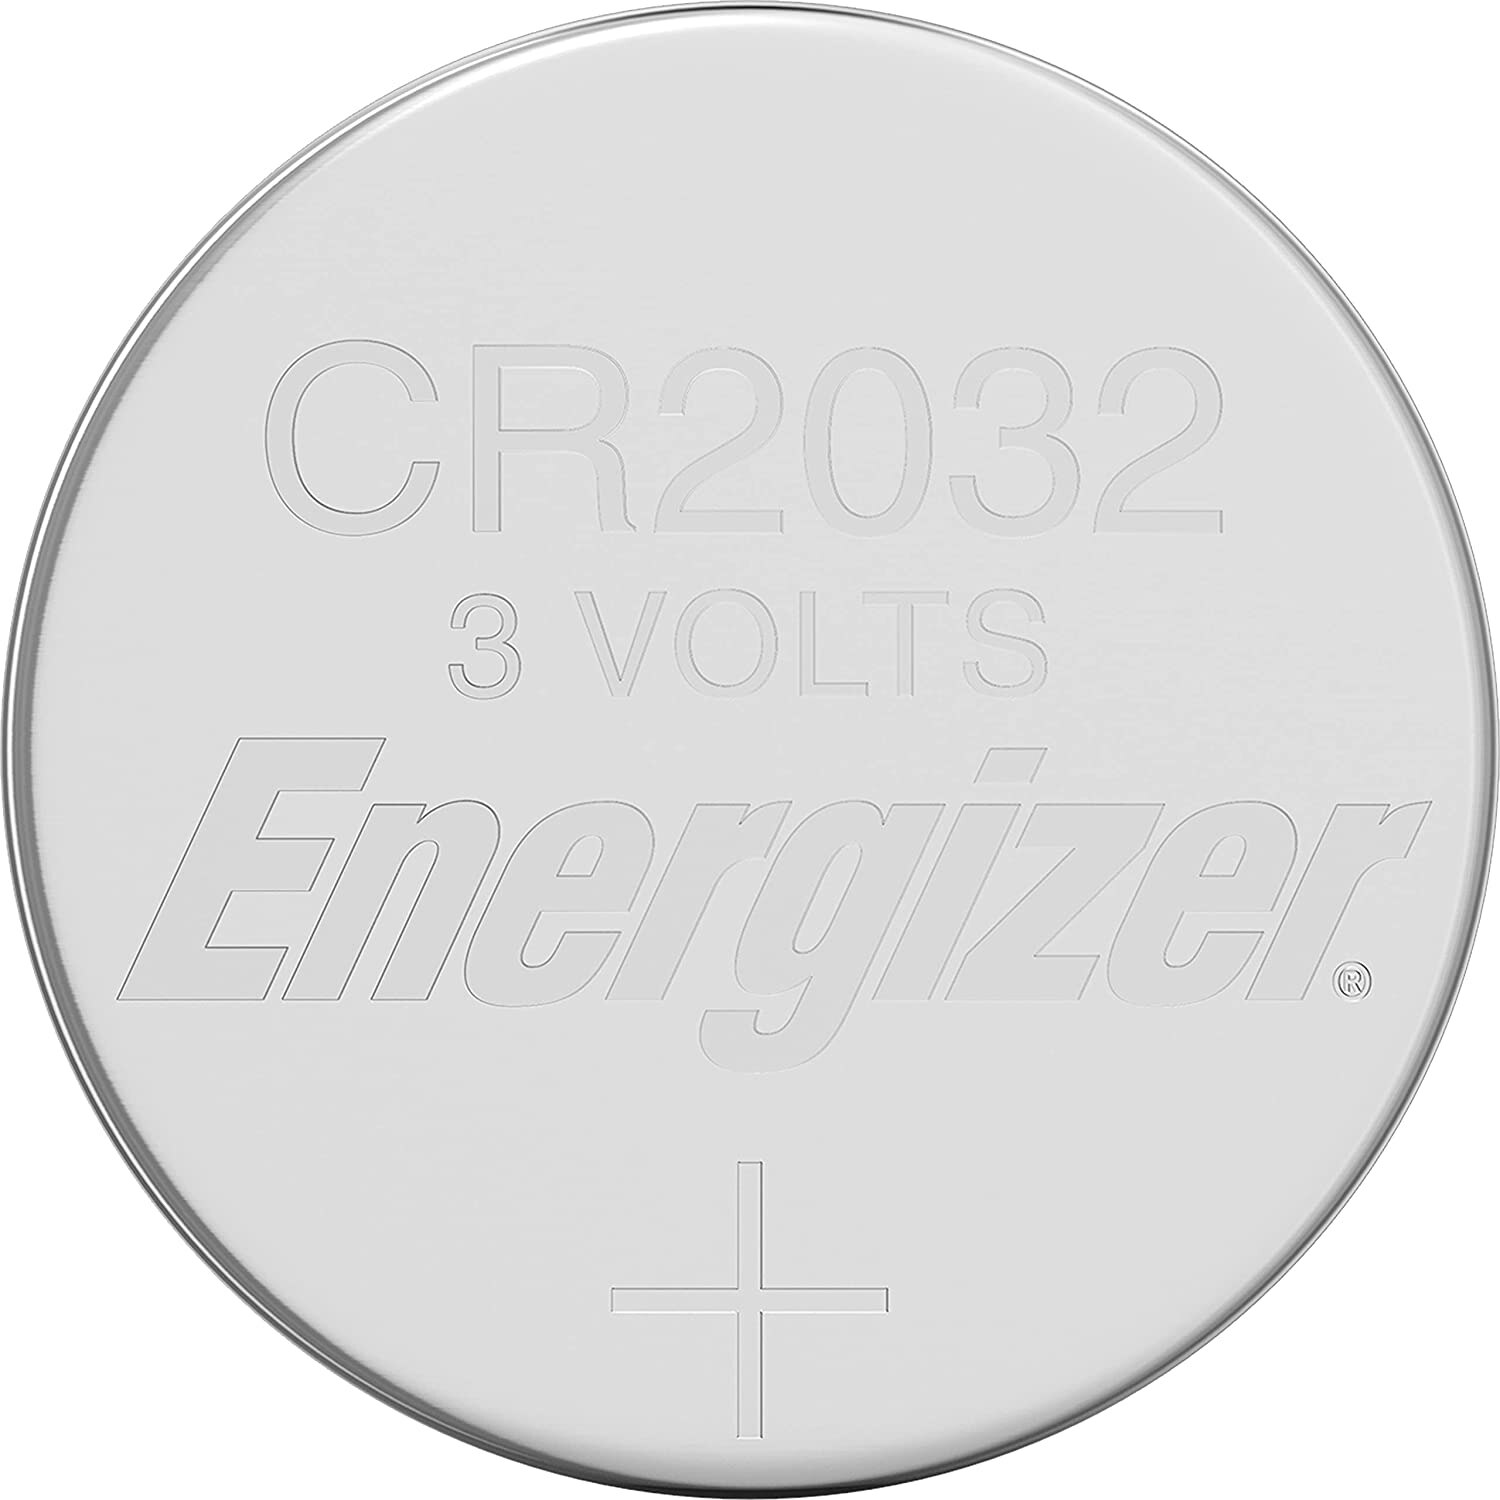 Lapos akkumulátor Energizer cr2032 6032 3v 